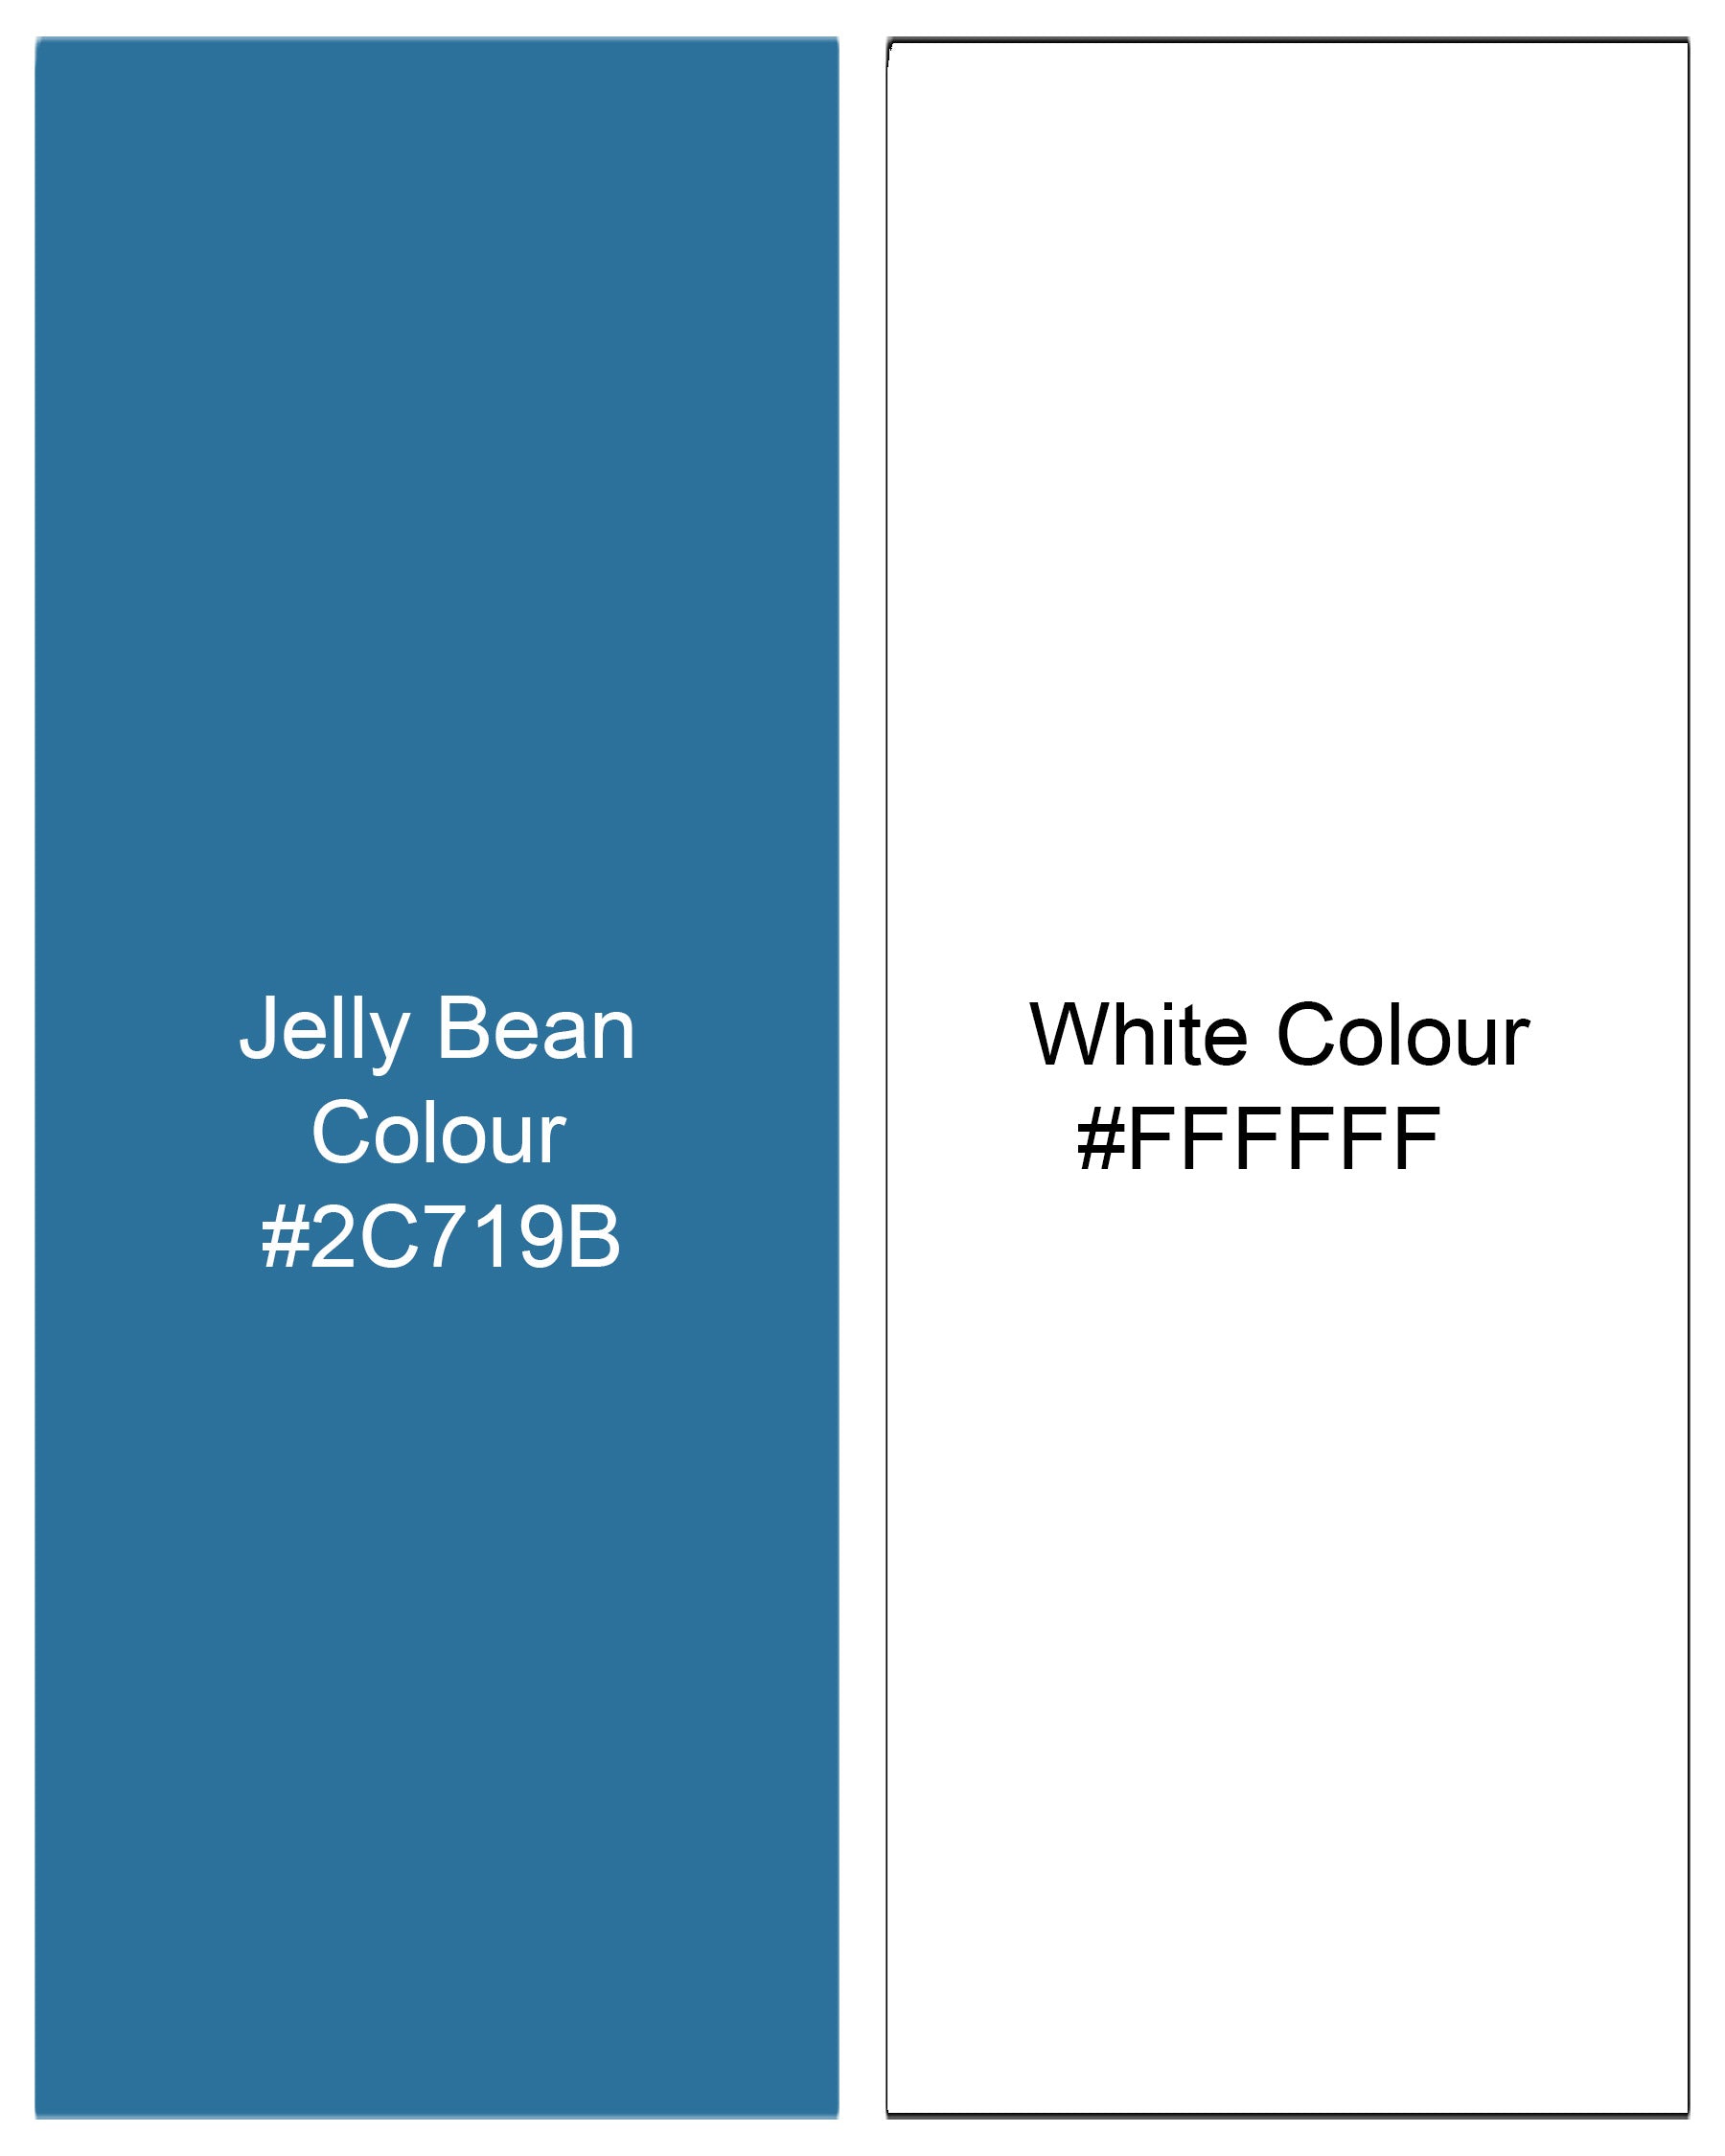 Jelly Bean Blue With Bright White Checkered Twill Premium Cotton Shirt 7704-BD-38, 7704-BD-H-38, 7704-BD-39,7704-BD-H-39, 7704-BD-40, 7704-BD-H-40, 7704-BD-42, 7704-BD-H-42, 7704-BD-44, 7704-BD-H-44, 7704-BD-46, 7704-BD-H-46, 7704-BD-48, 7704-BD-H-48, 7704-BD-50, 7704-BD-H-50, 7704-BD-52, 7704-BD-H-52